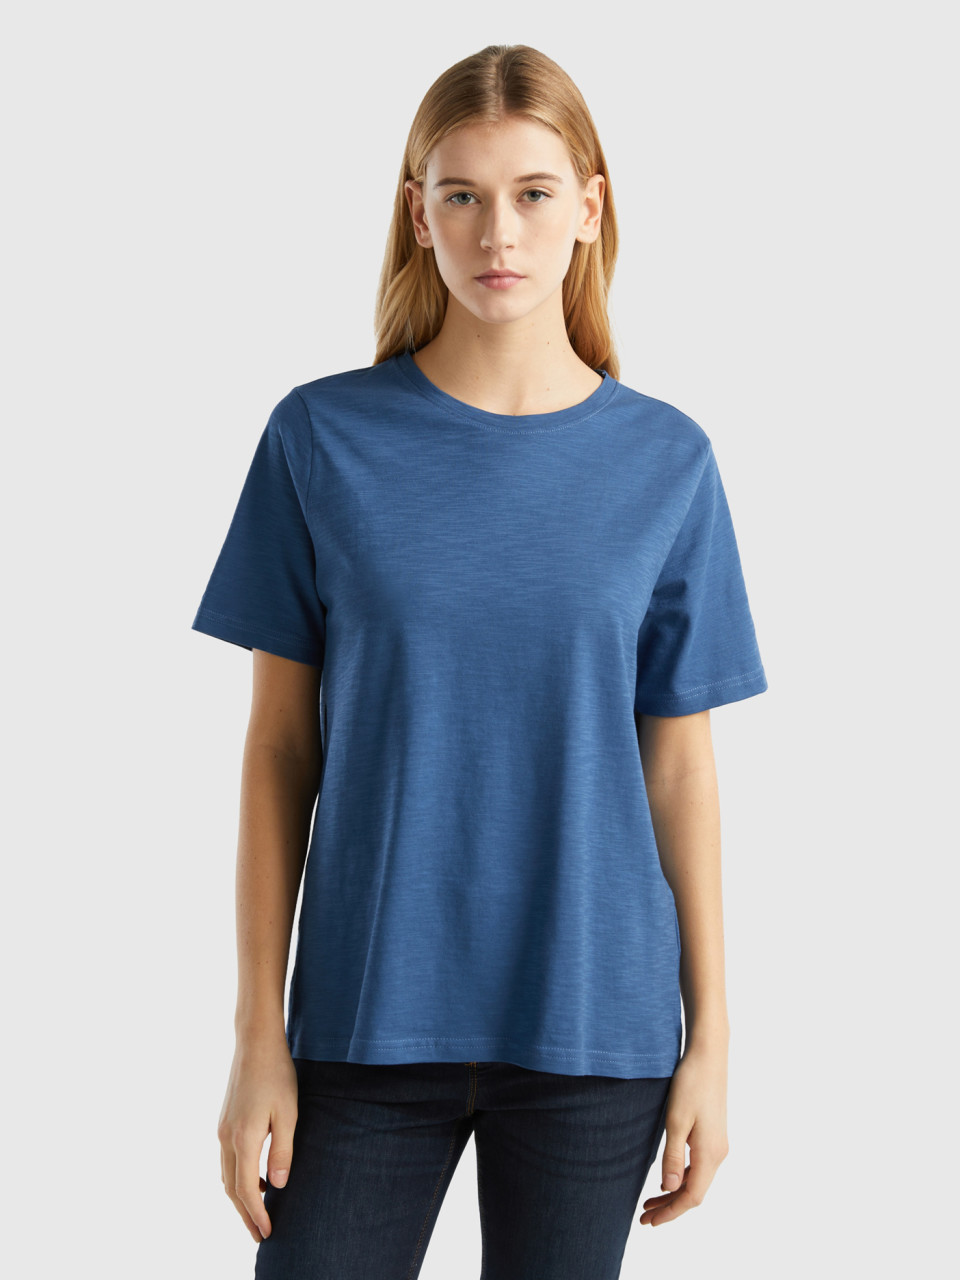 Benetton, Crew Neck T-shirt In Slub Cotton, Air Force Blue, Women